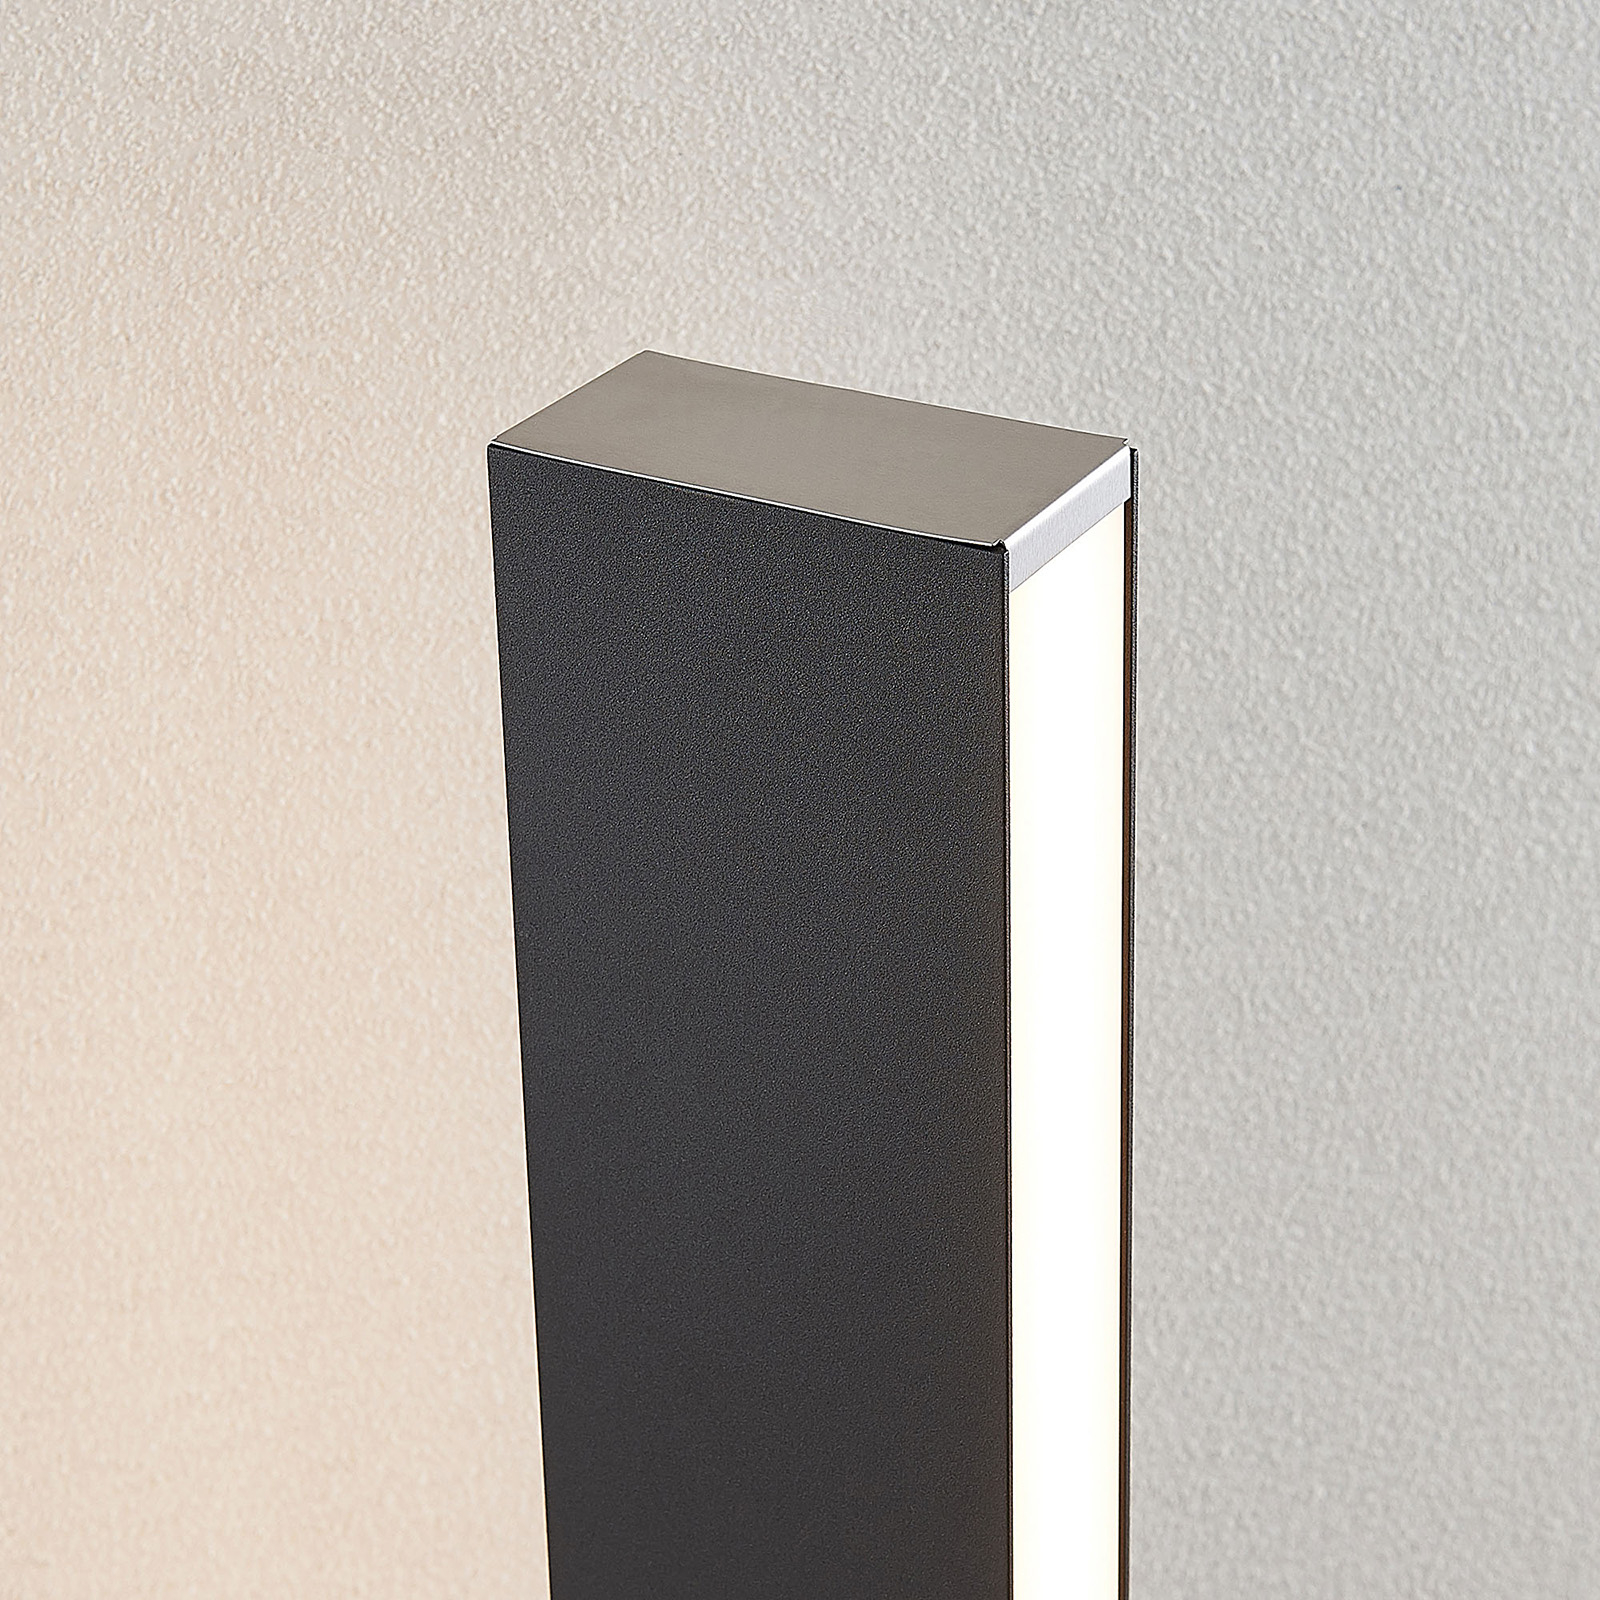 Lucande Aegisa bolardo luminoso LED, 110 cm